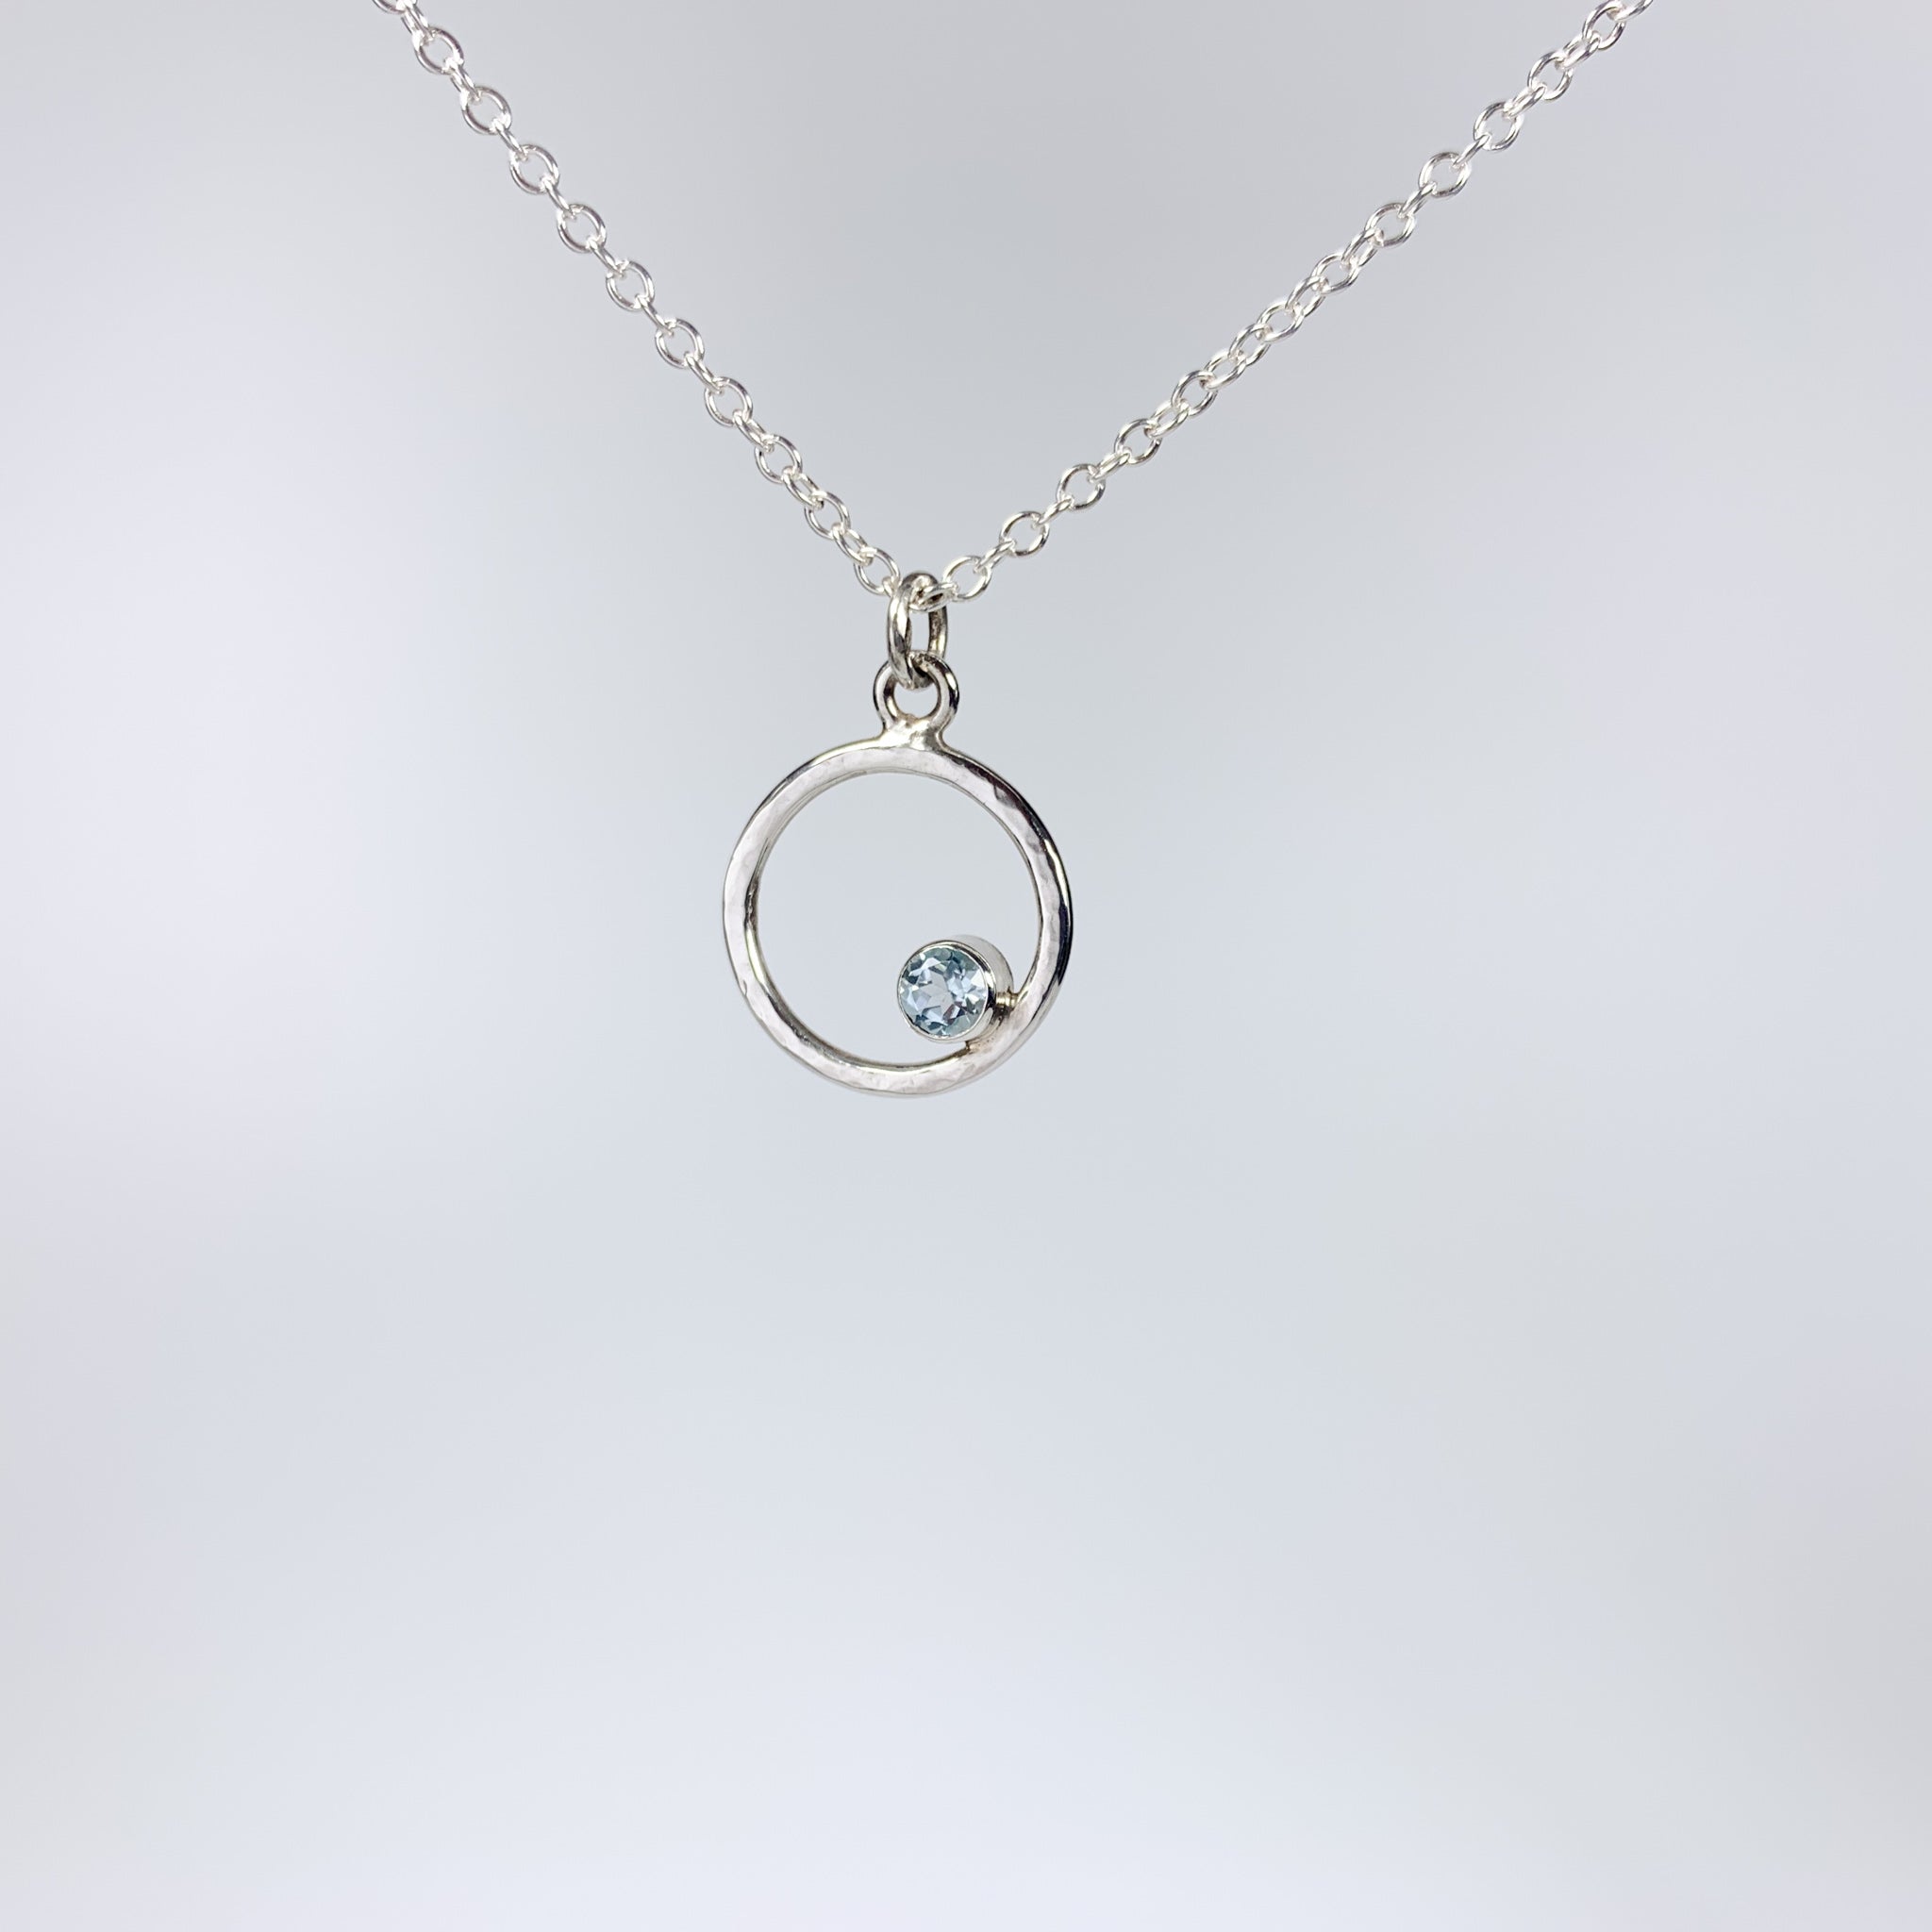 Caldera Eclissi Sky Blue Topaz Silver Pendant Necklace